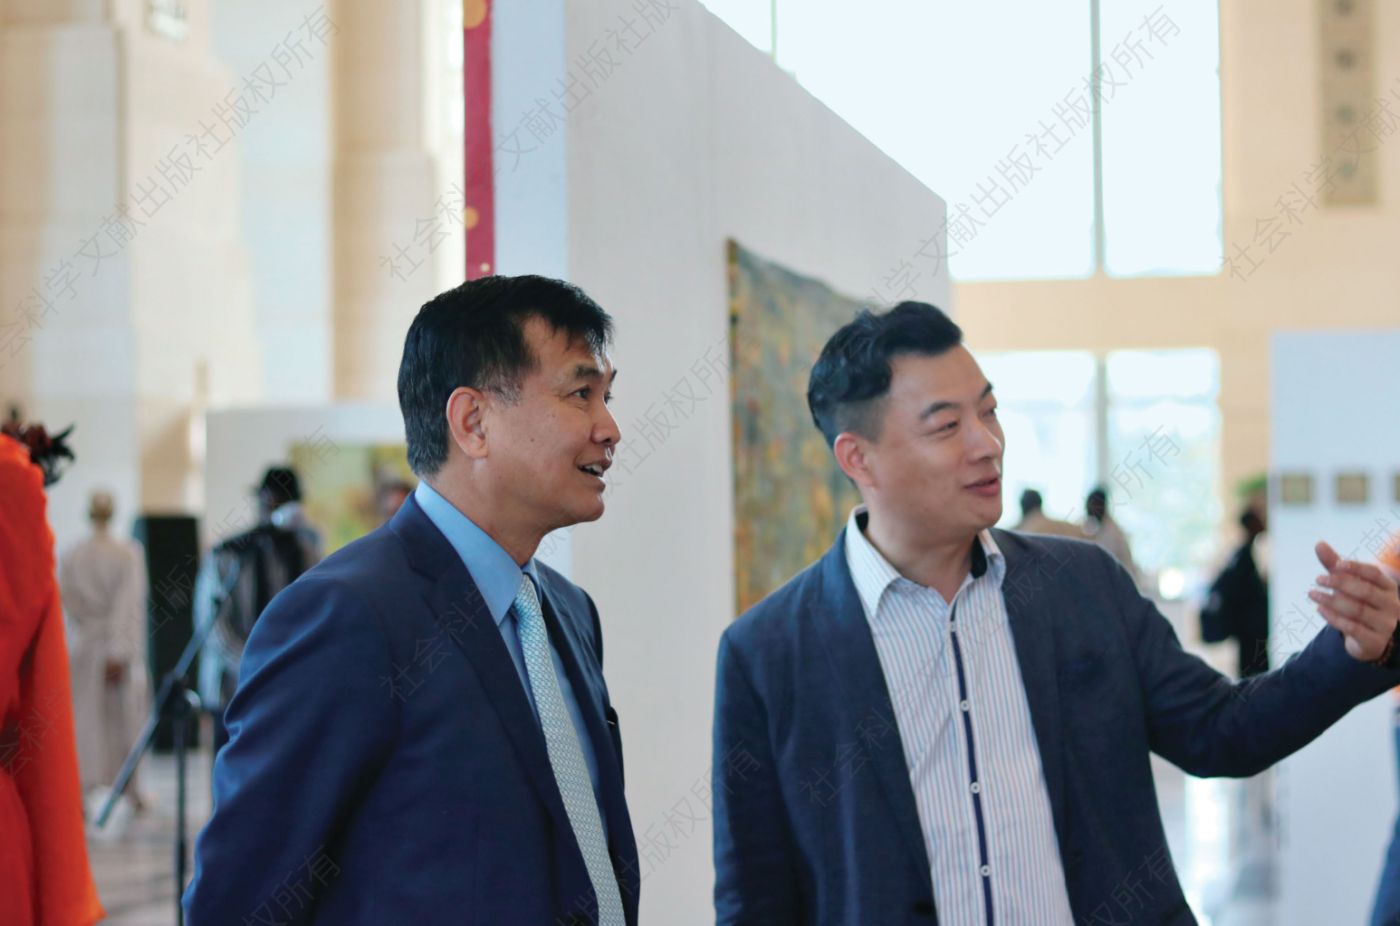 金江波给张迅大使讲解作品Jin Jiangbo introduces the works to the Ambassador Zhang Xun